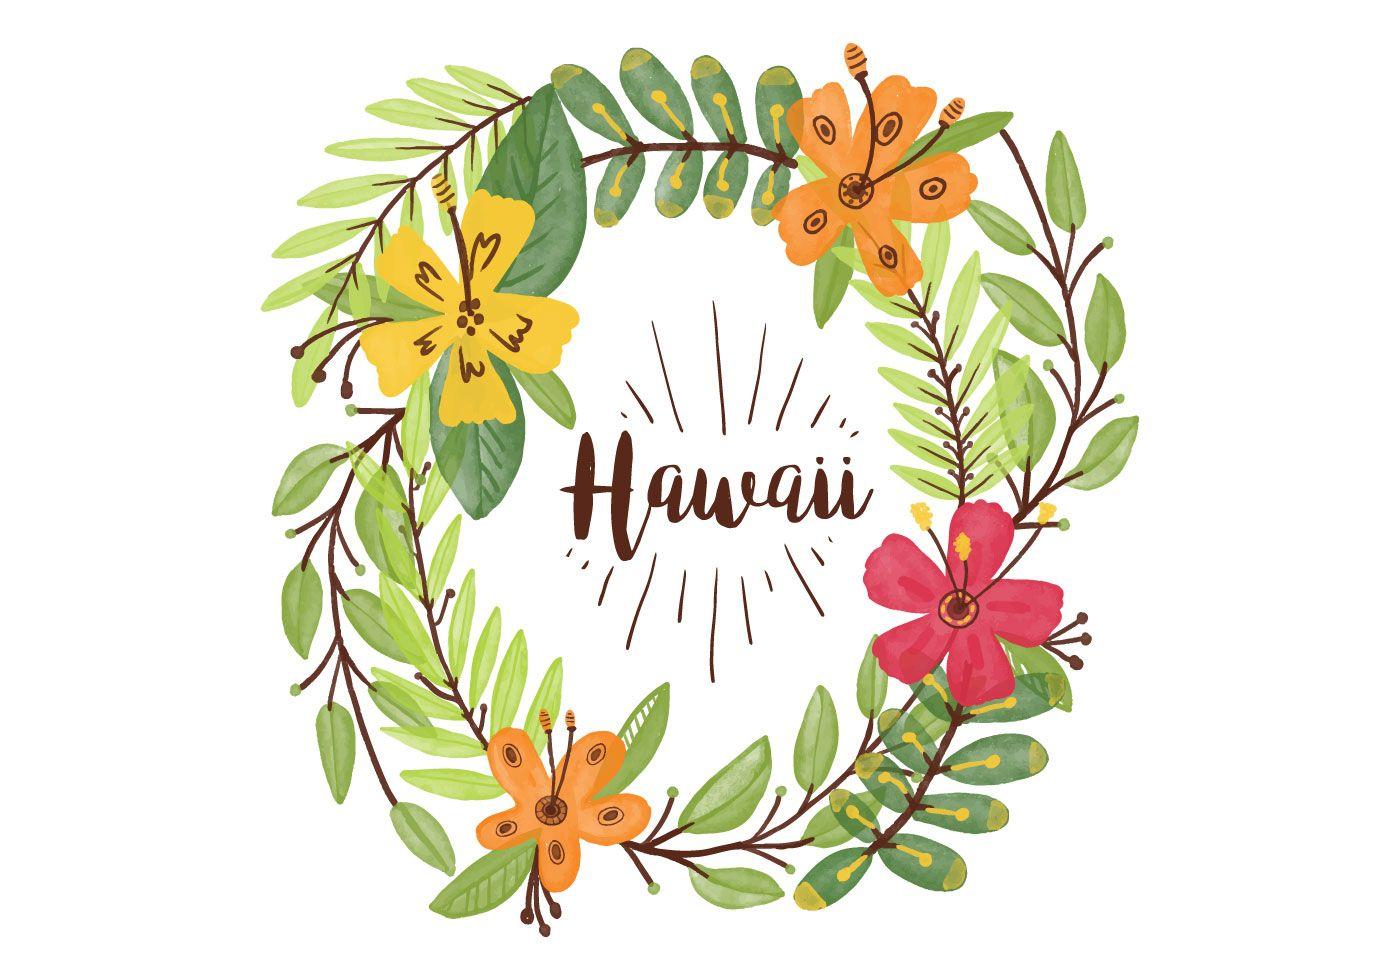 Hawaiian Free Vector Art - (367 Free Downloads)